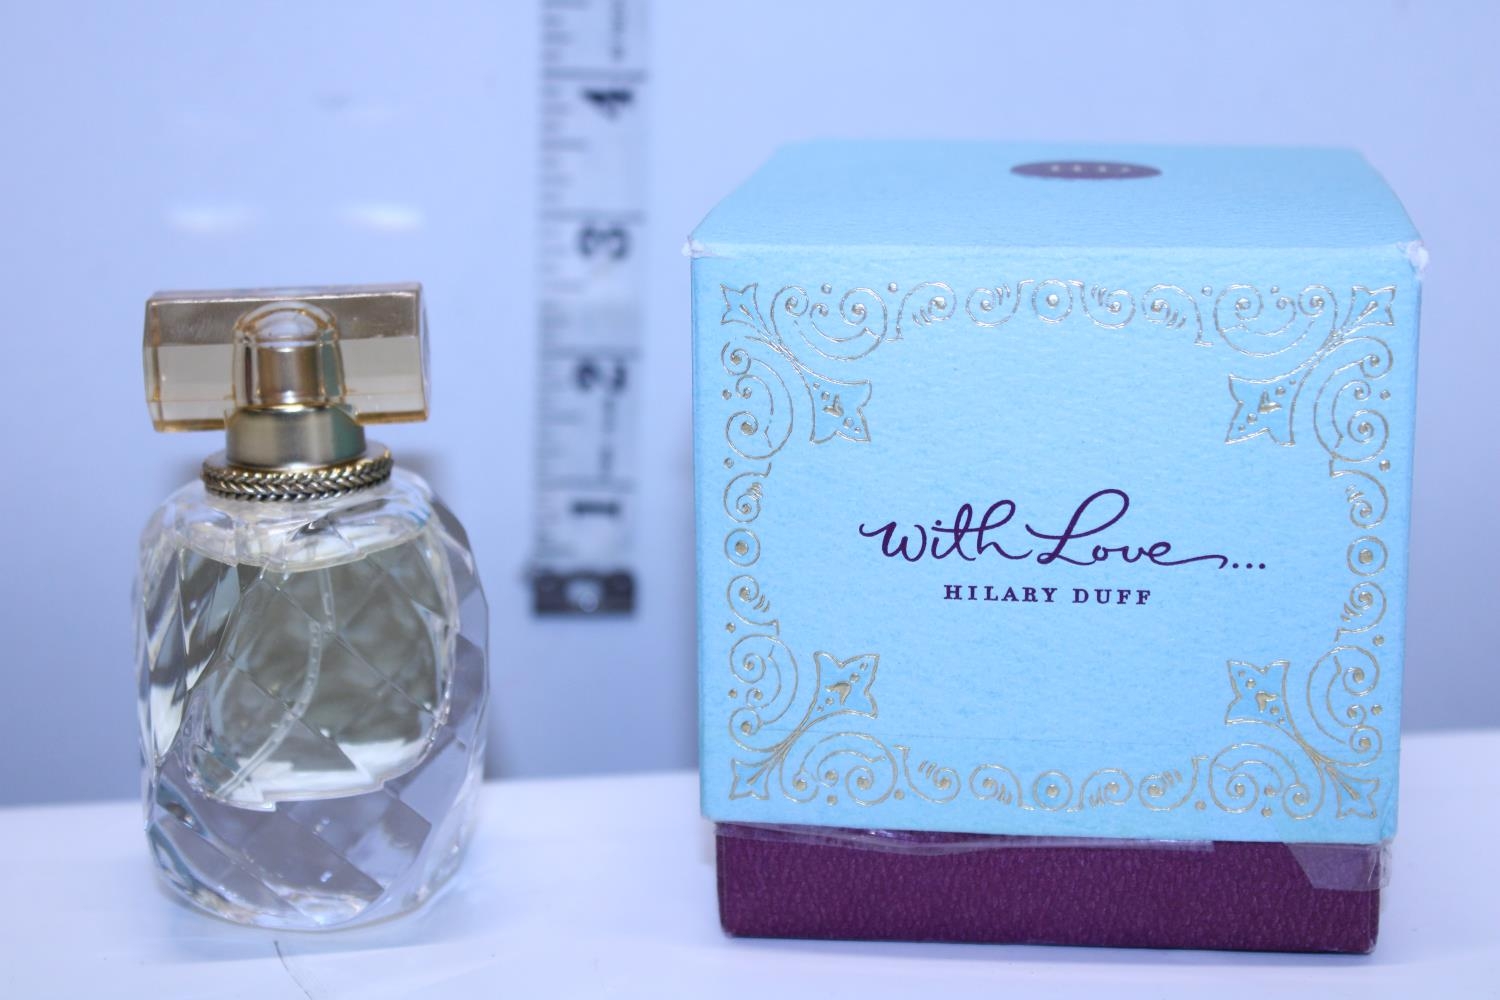 A Hilary Duff perfume spray